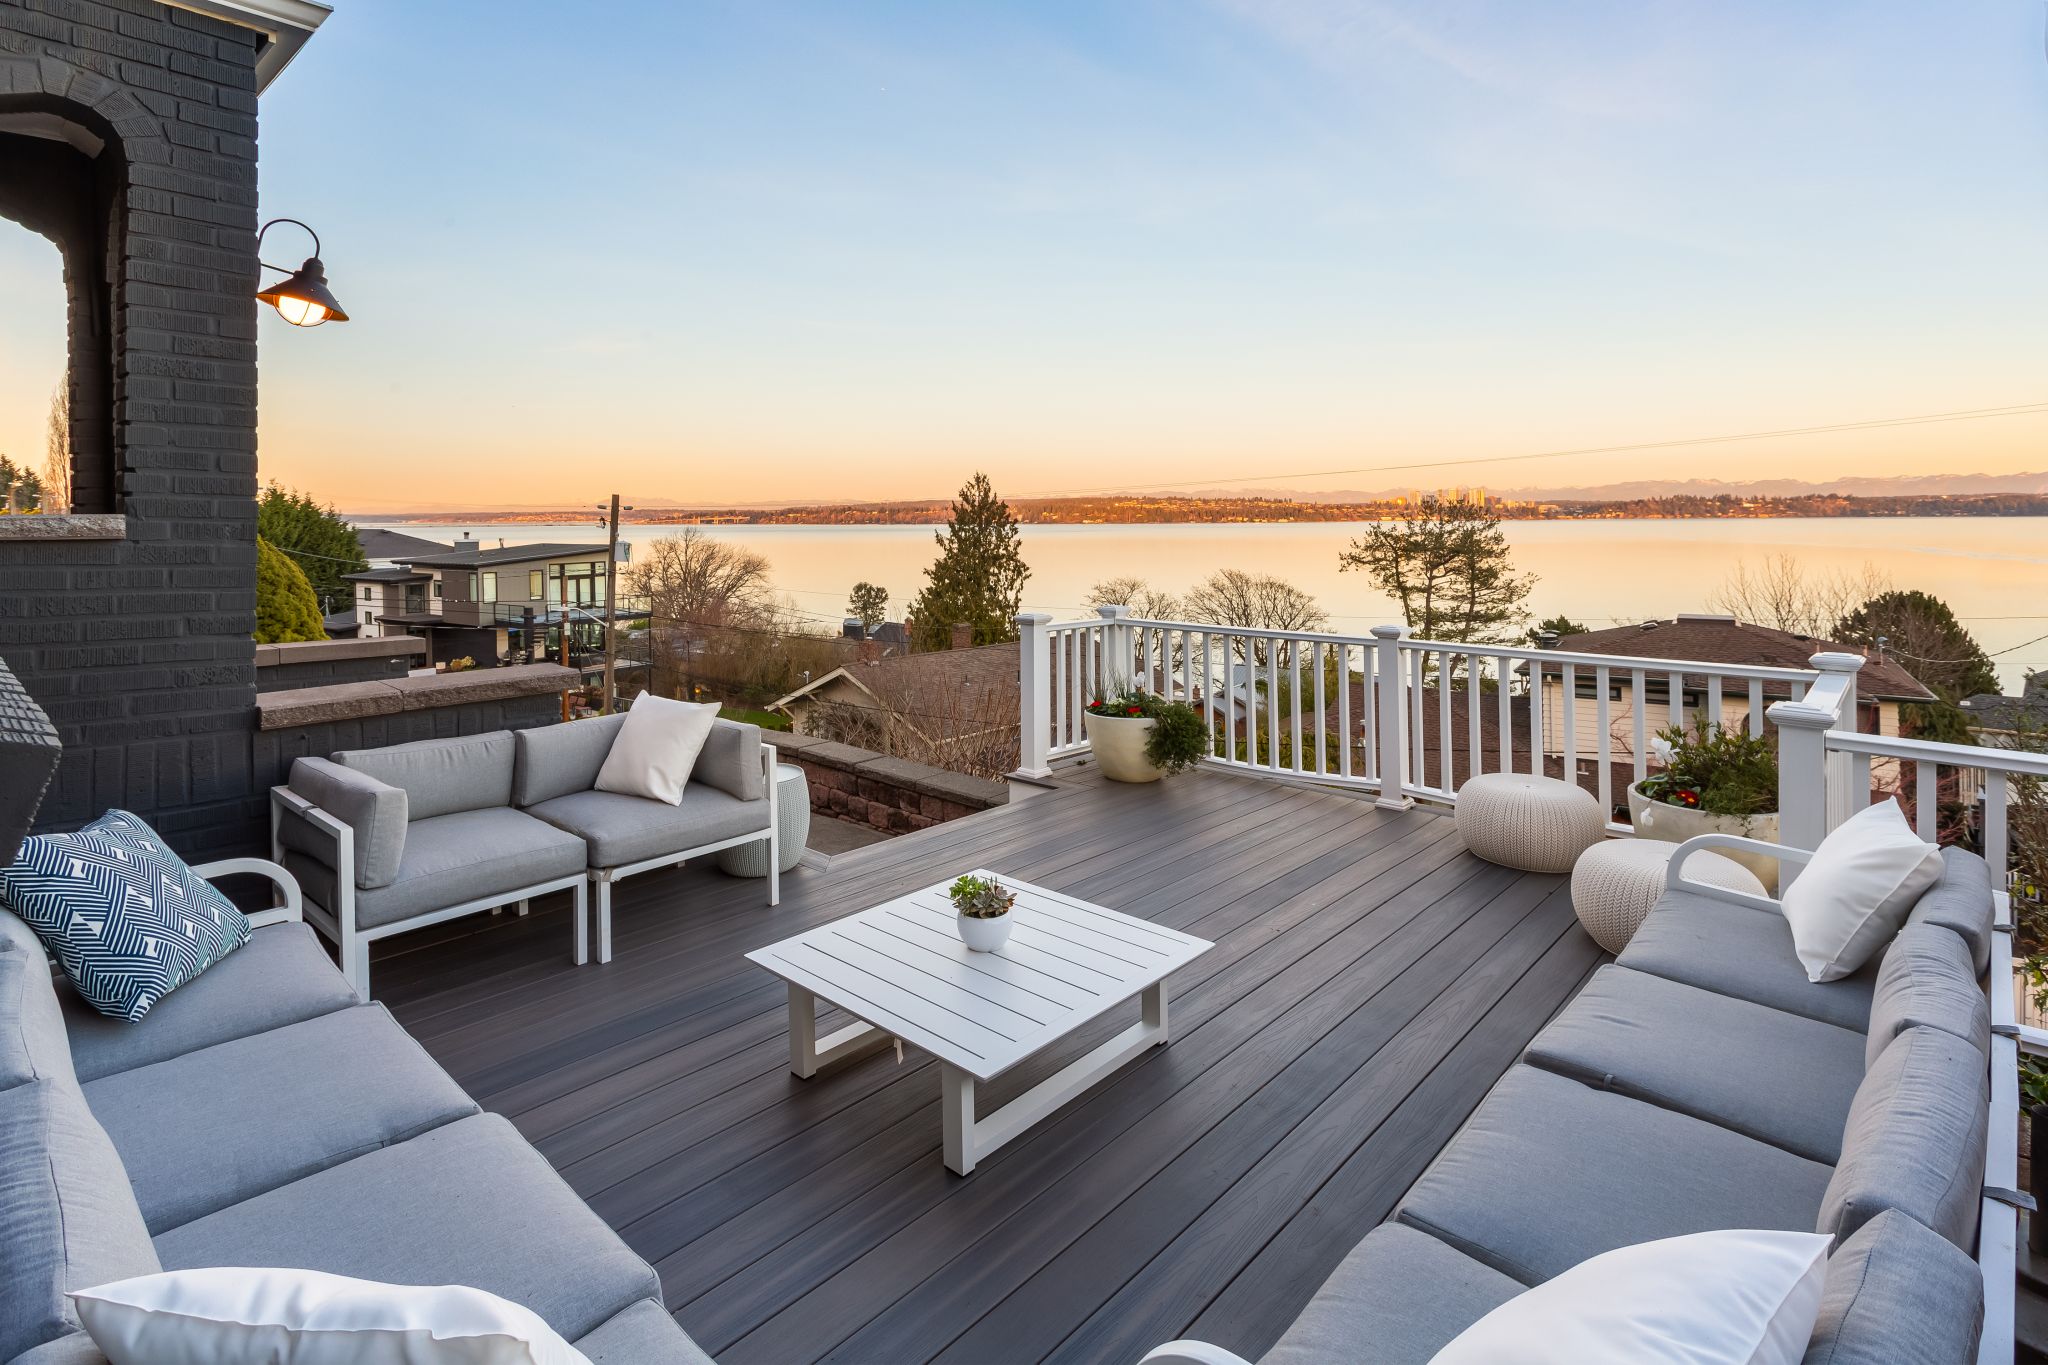 Beautiful new Jersey Shore NJ deck builder trex deck white rails gray patio furniture